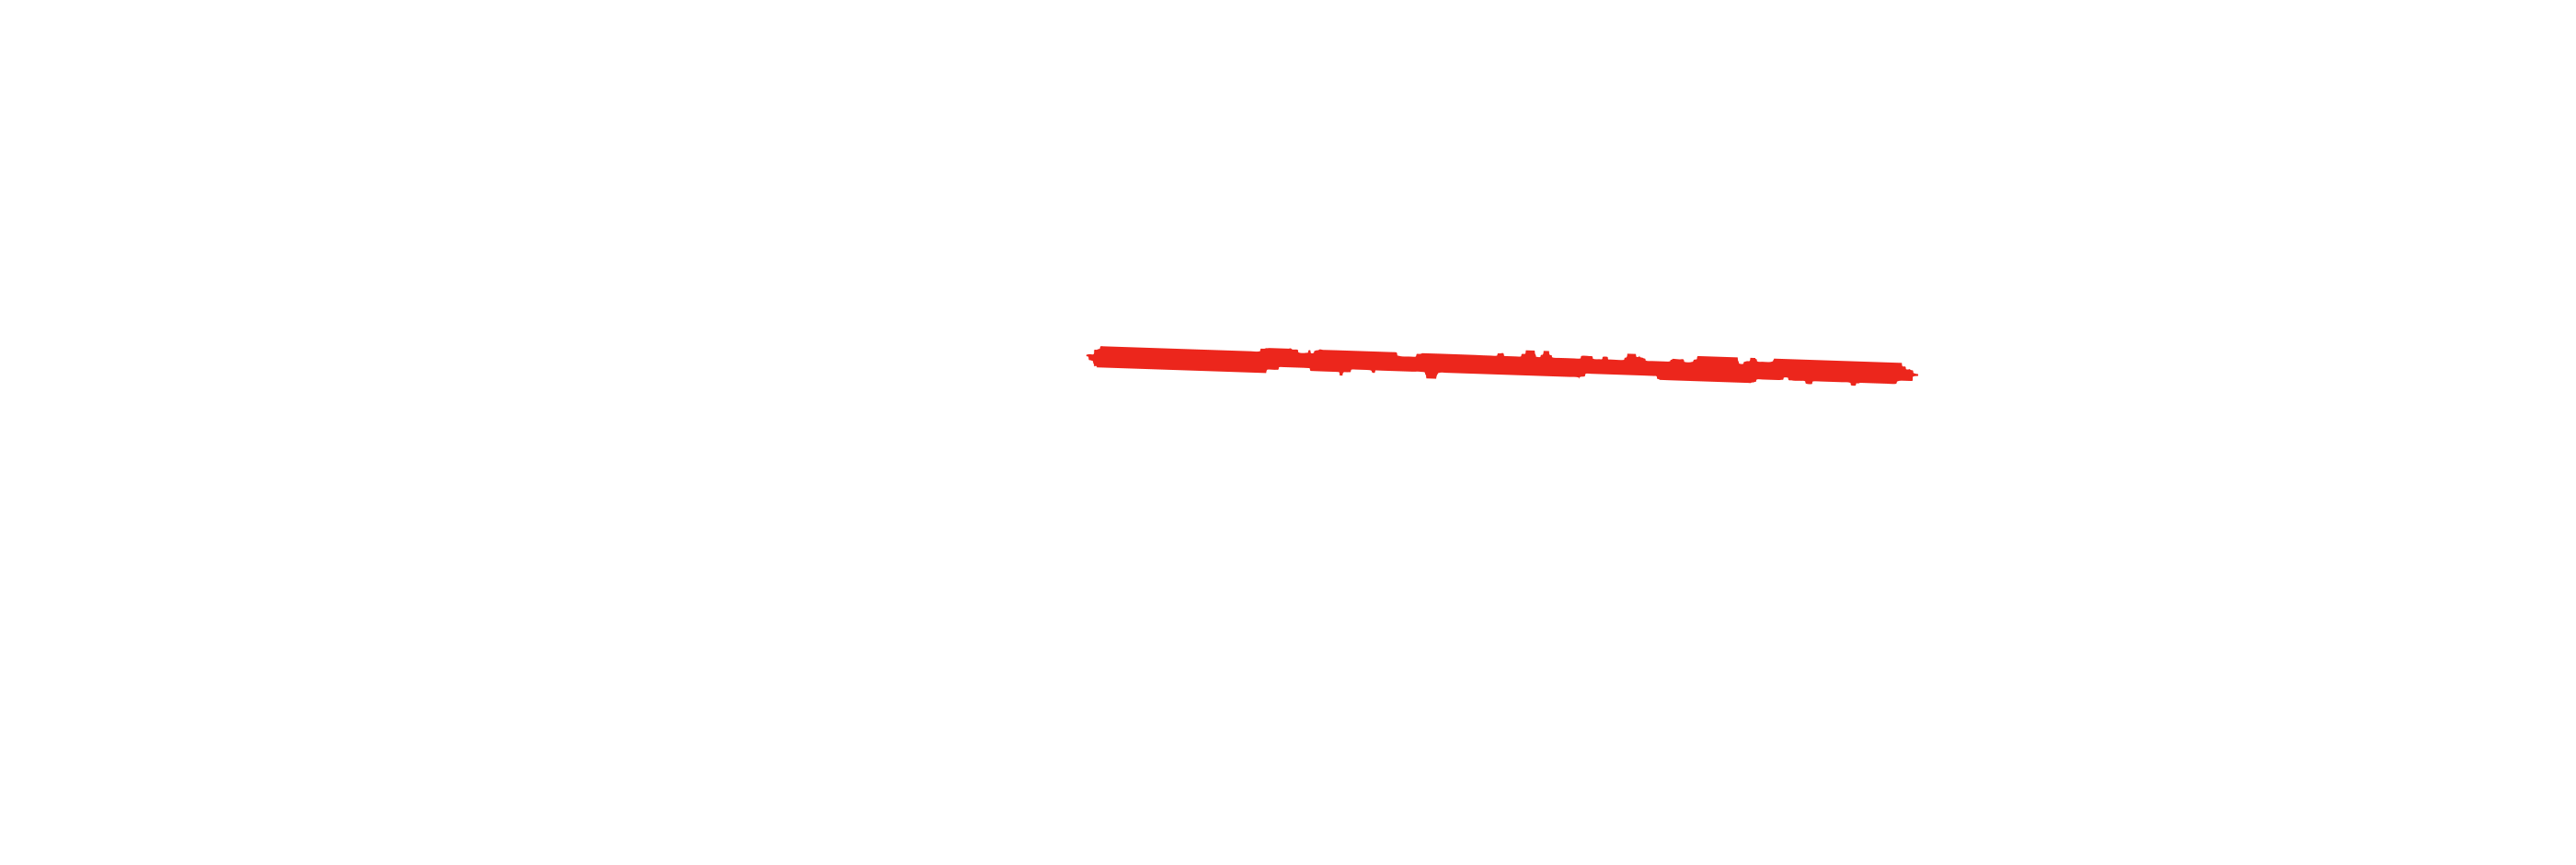 The Change Architect